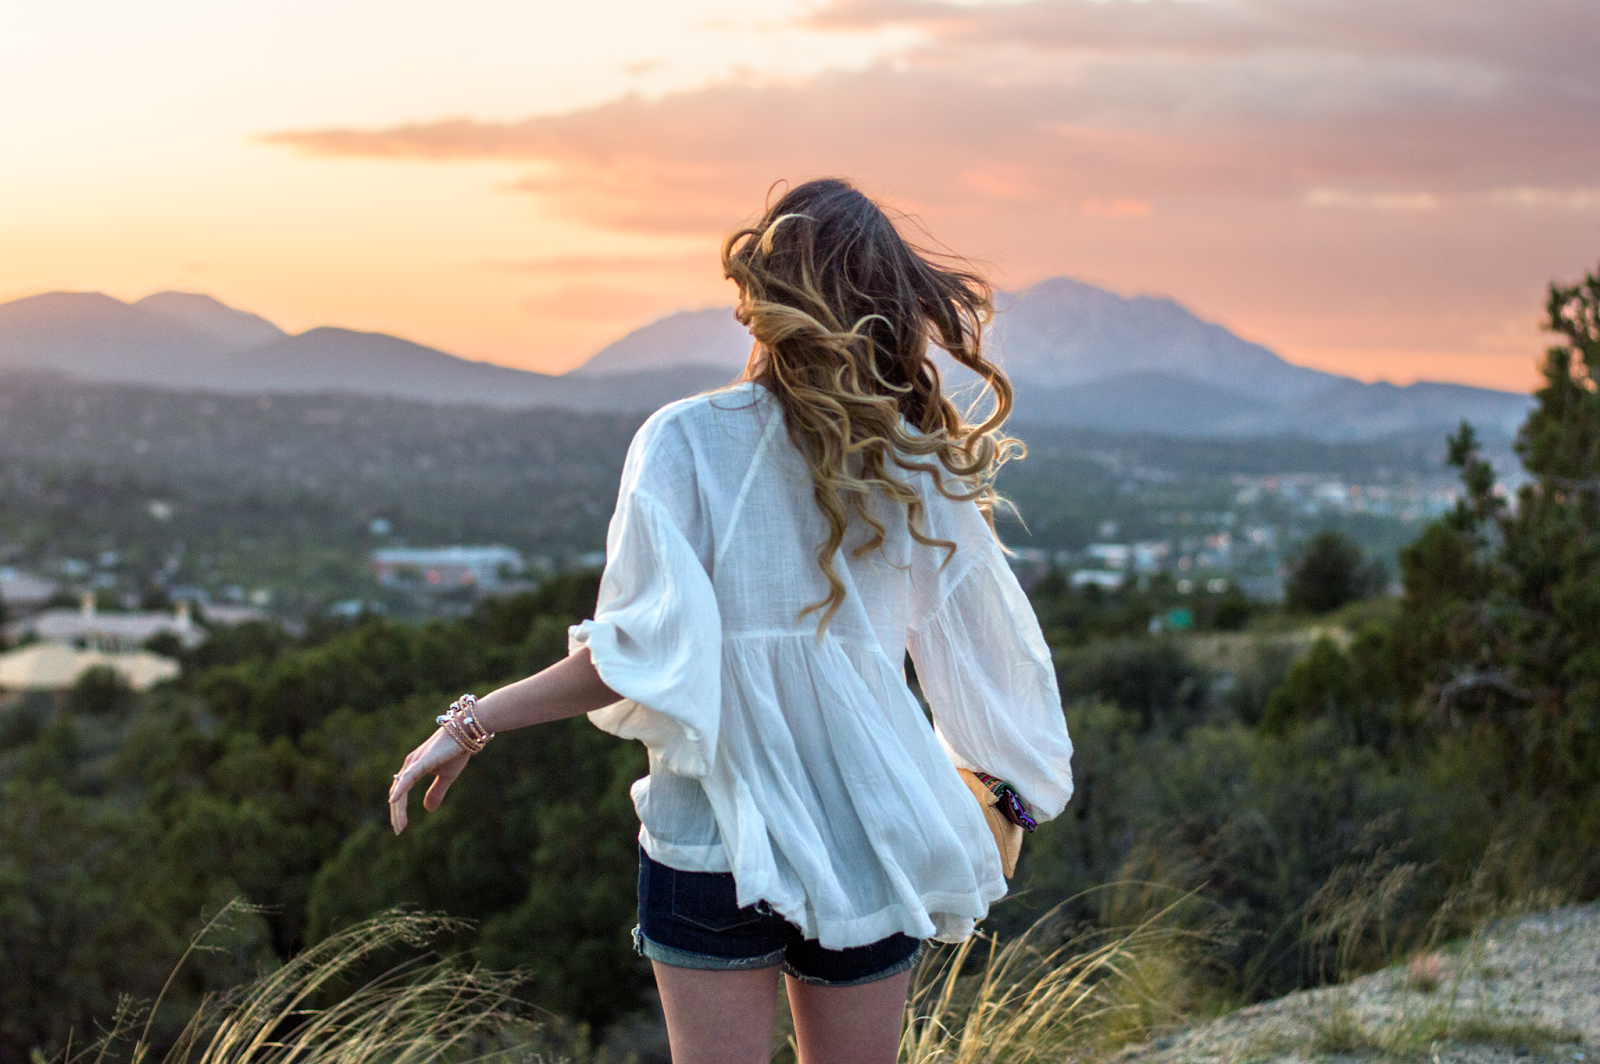 Arizona Girl: My Style: Prescott Skyline